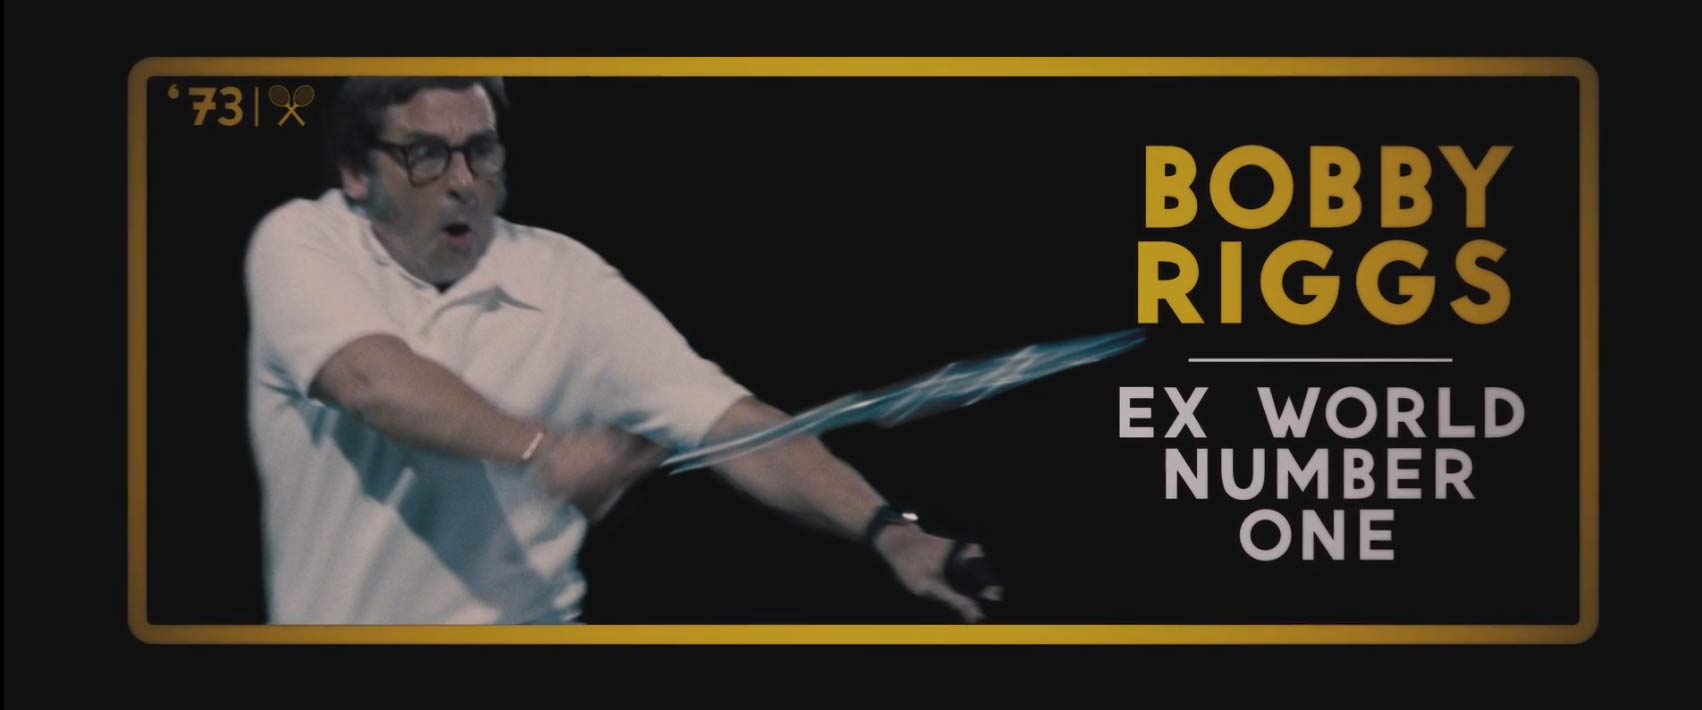 Battle of the Sexes' Trailer  Steve Carell, film trailer, Emma